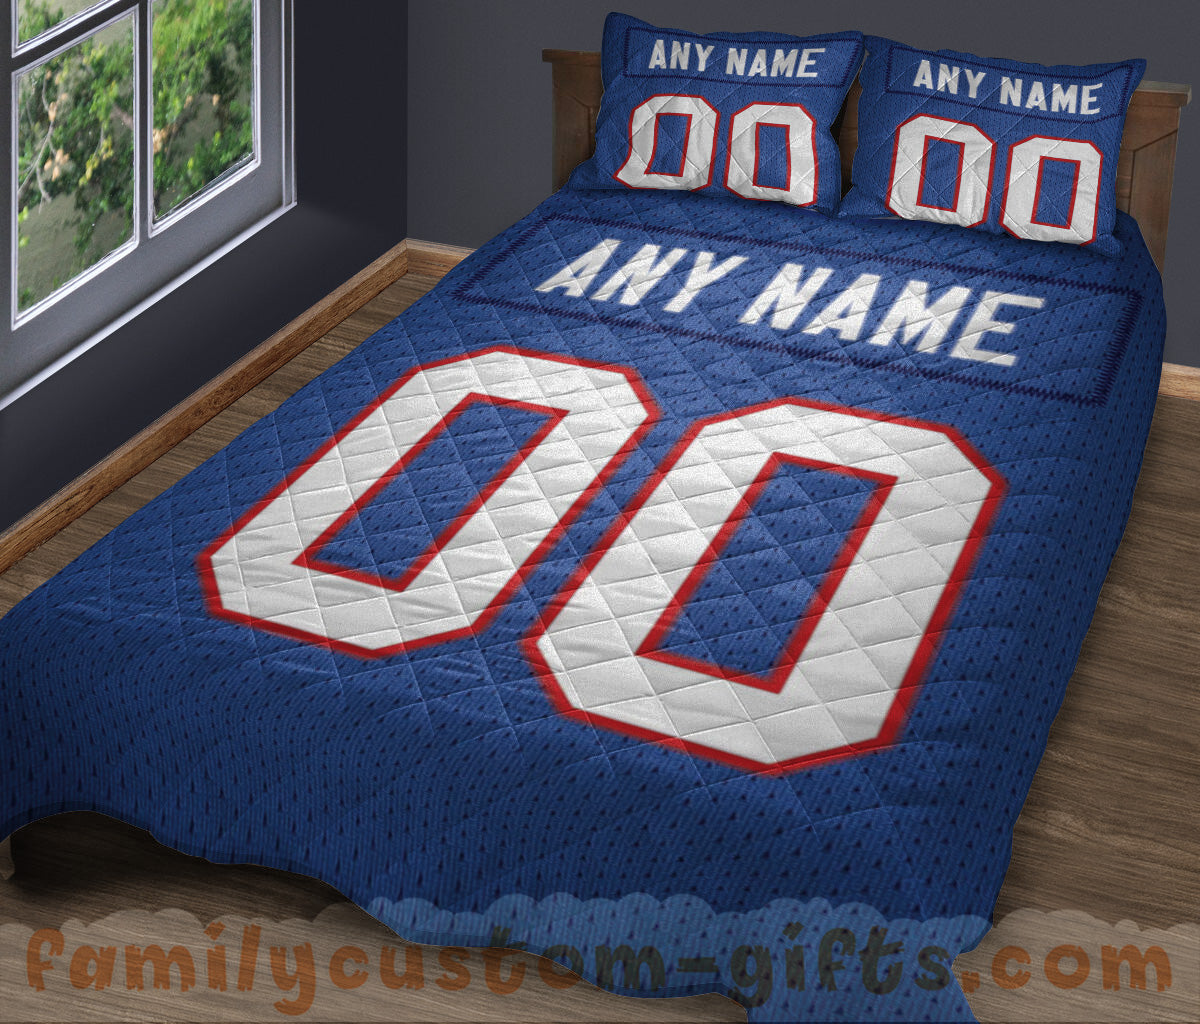 Custom Quilt Sets Buffalo Jersey Personalized Football Premium Quilt Bedding for Boys Girls Men Women